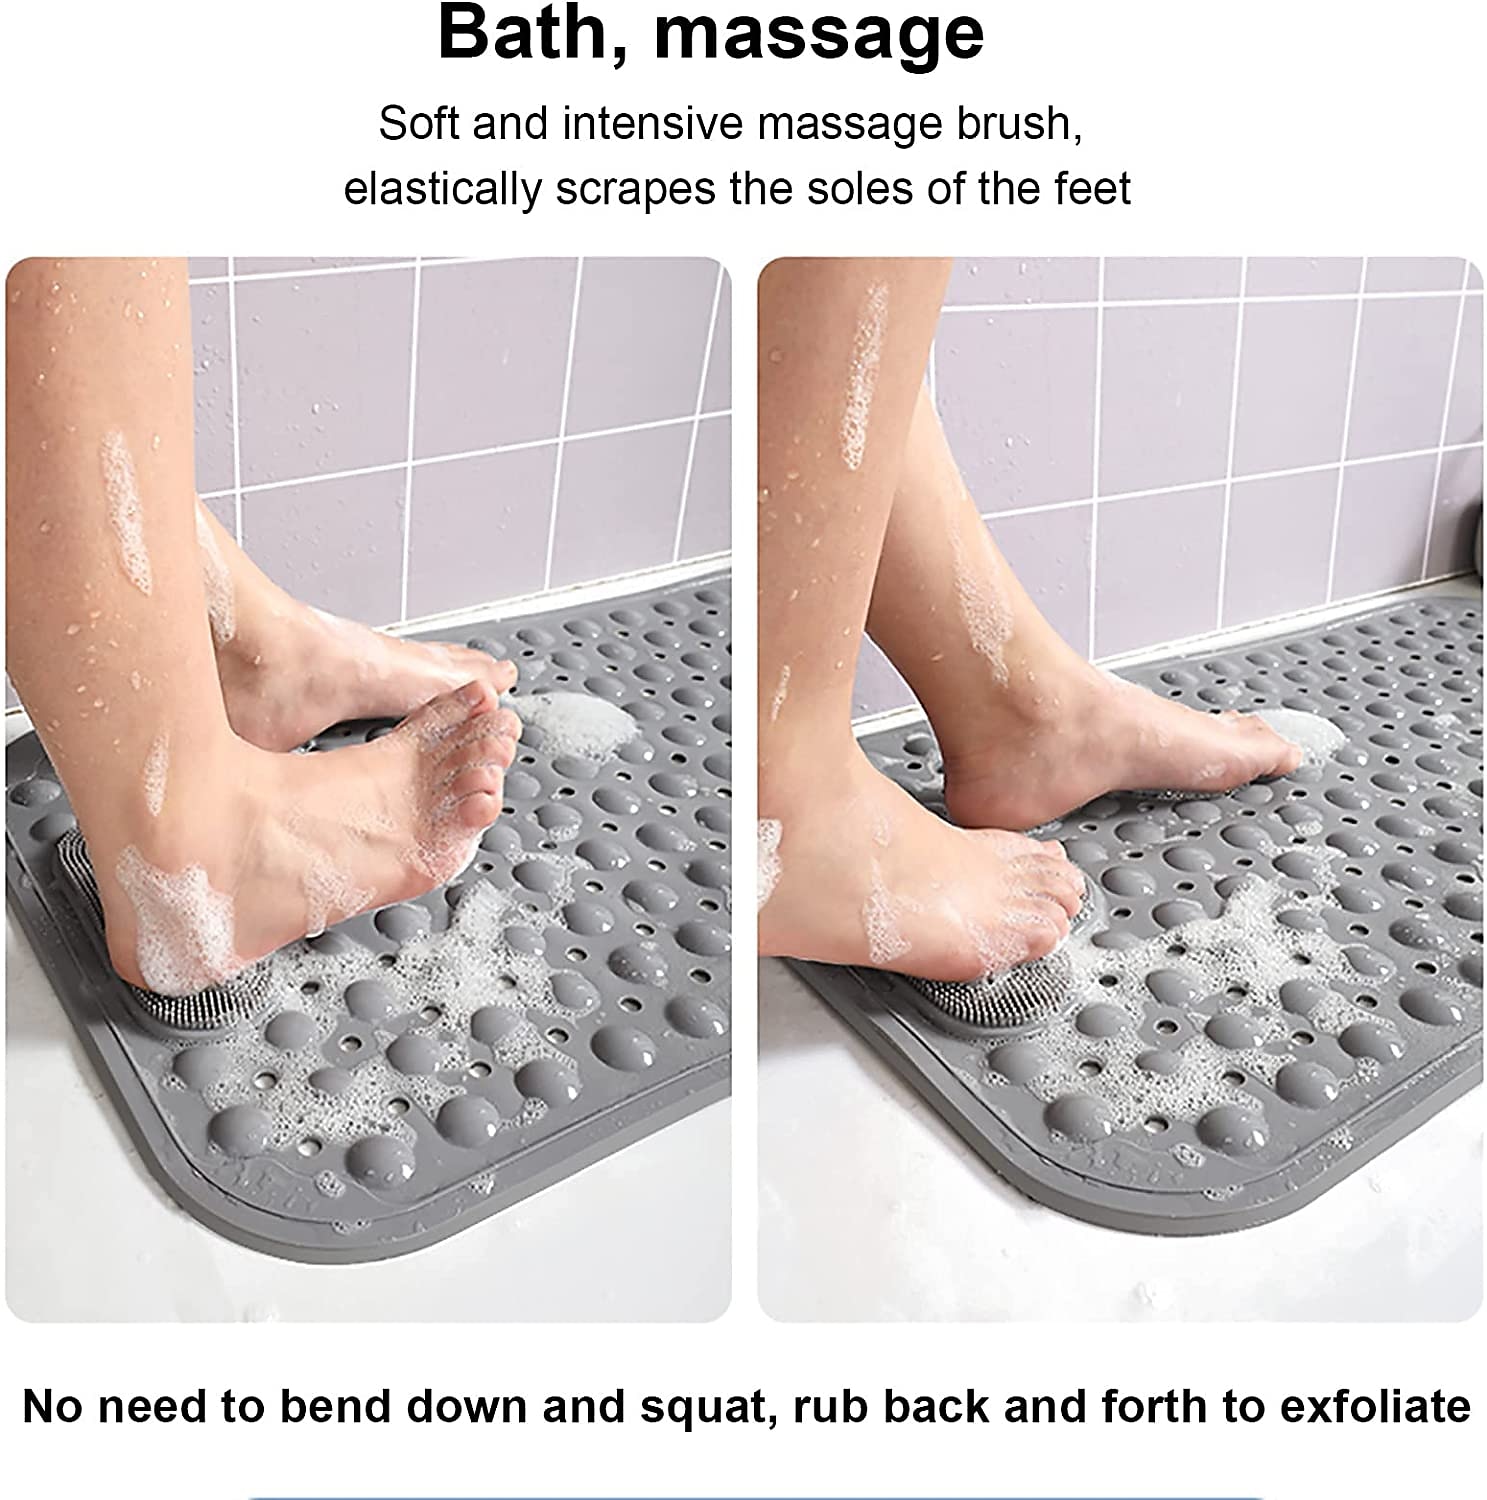 Pvc Anti Slip Shower Carpet, Waterproof Bathroom Carpet